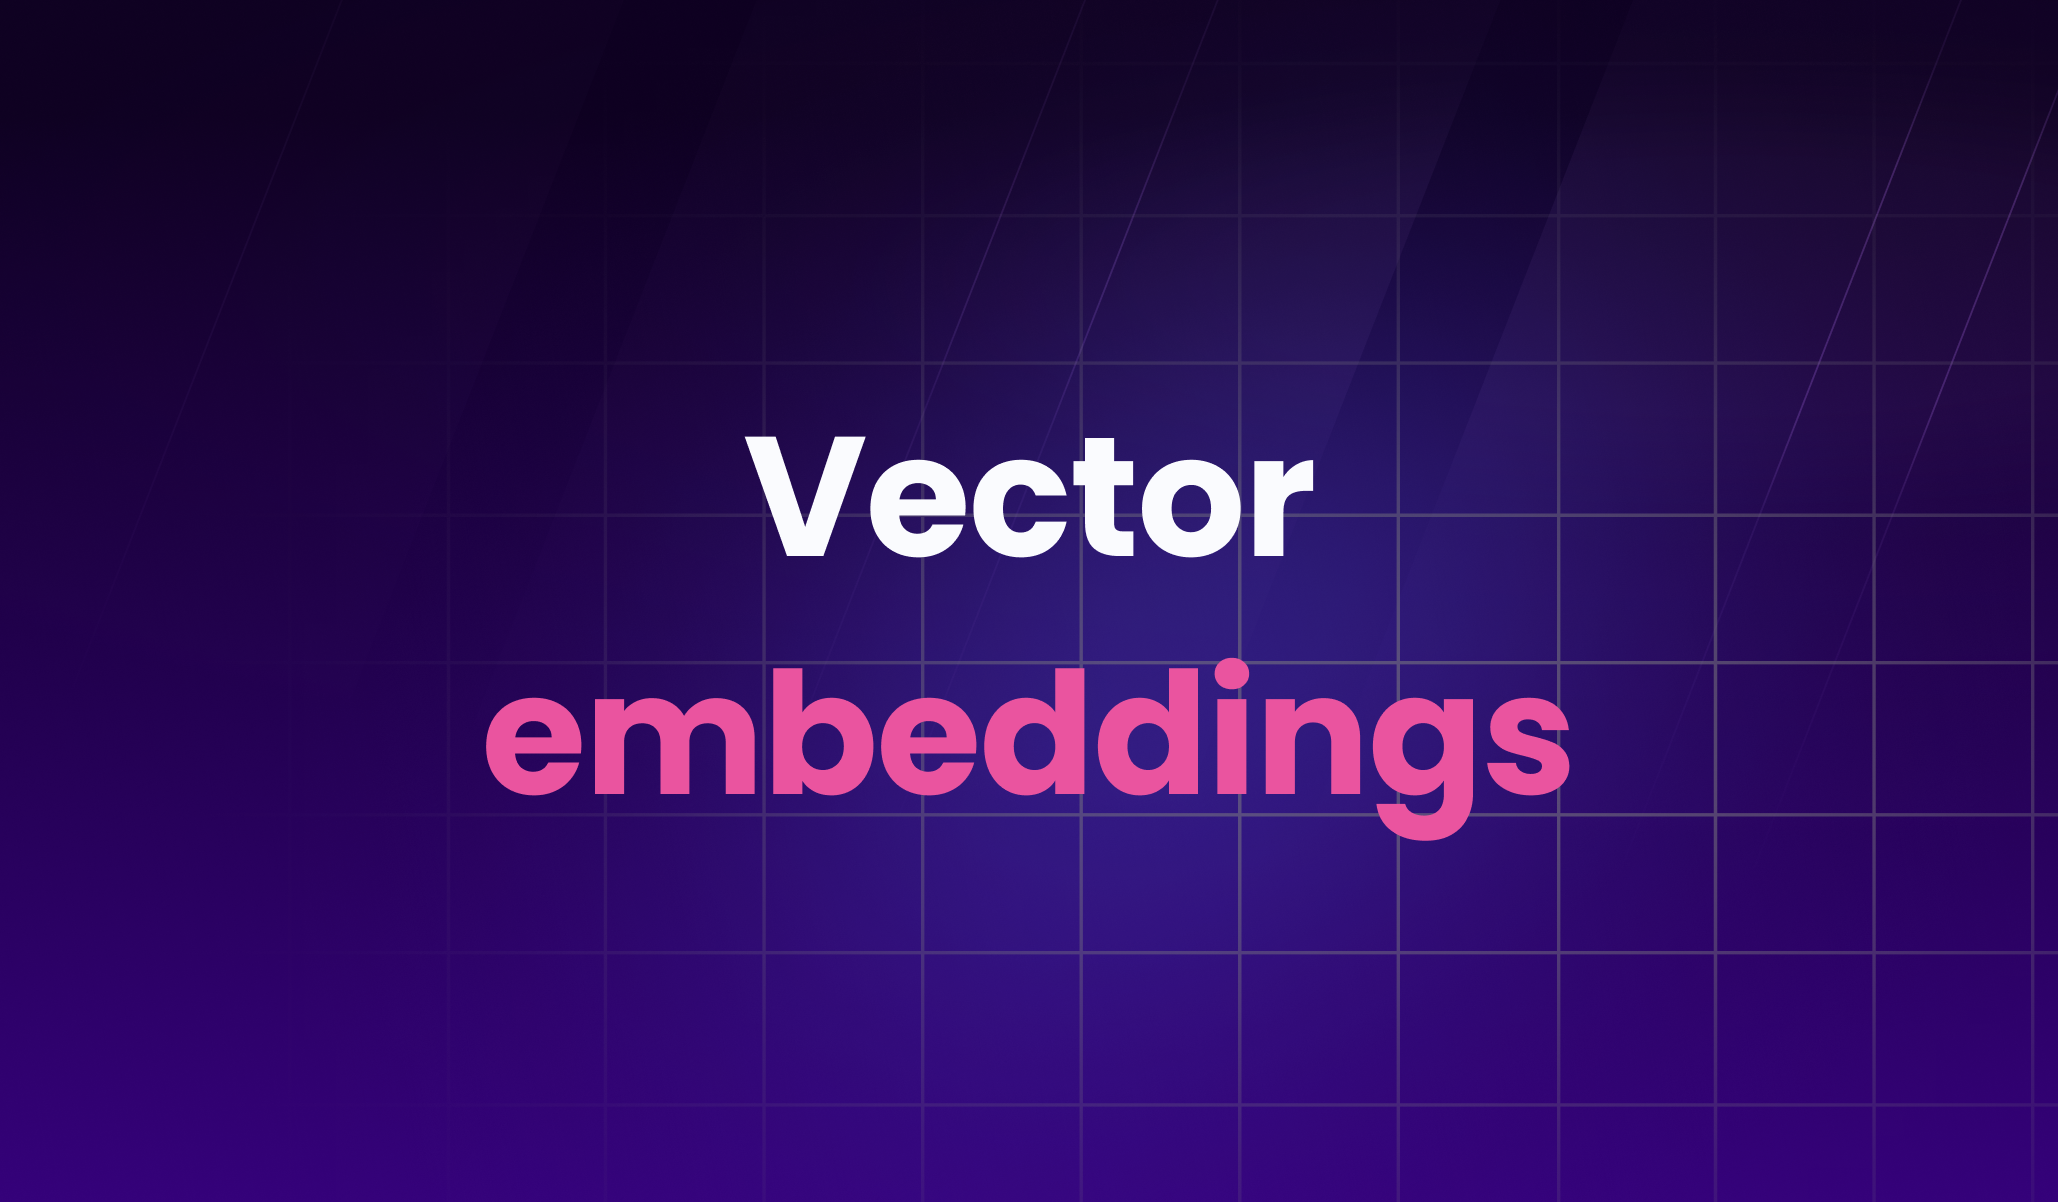 Vector embeddings